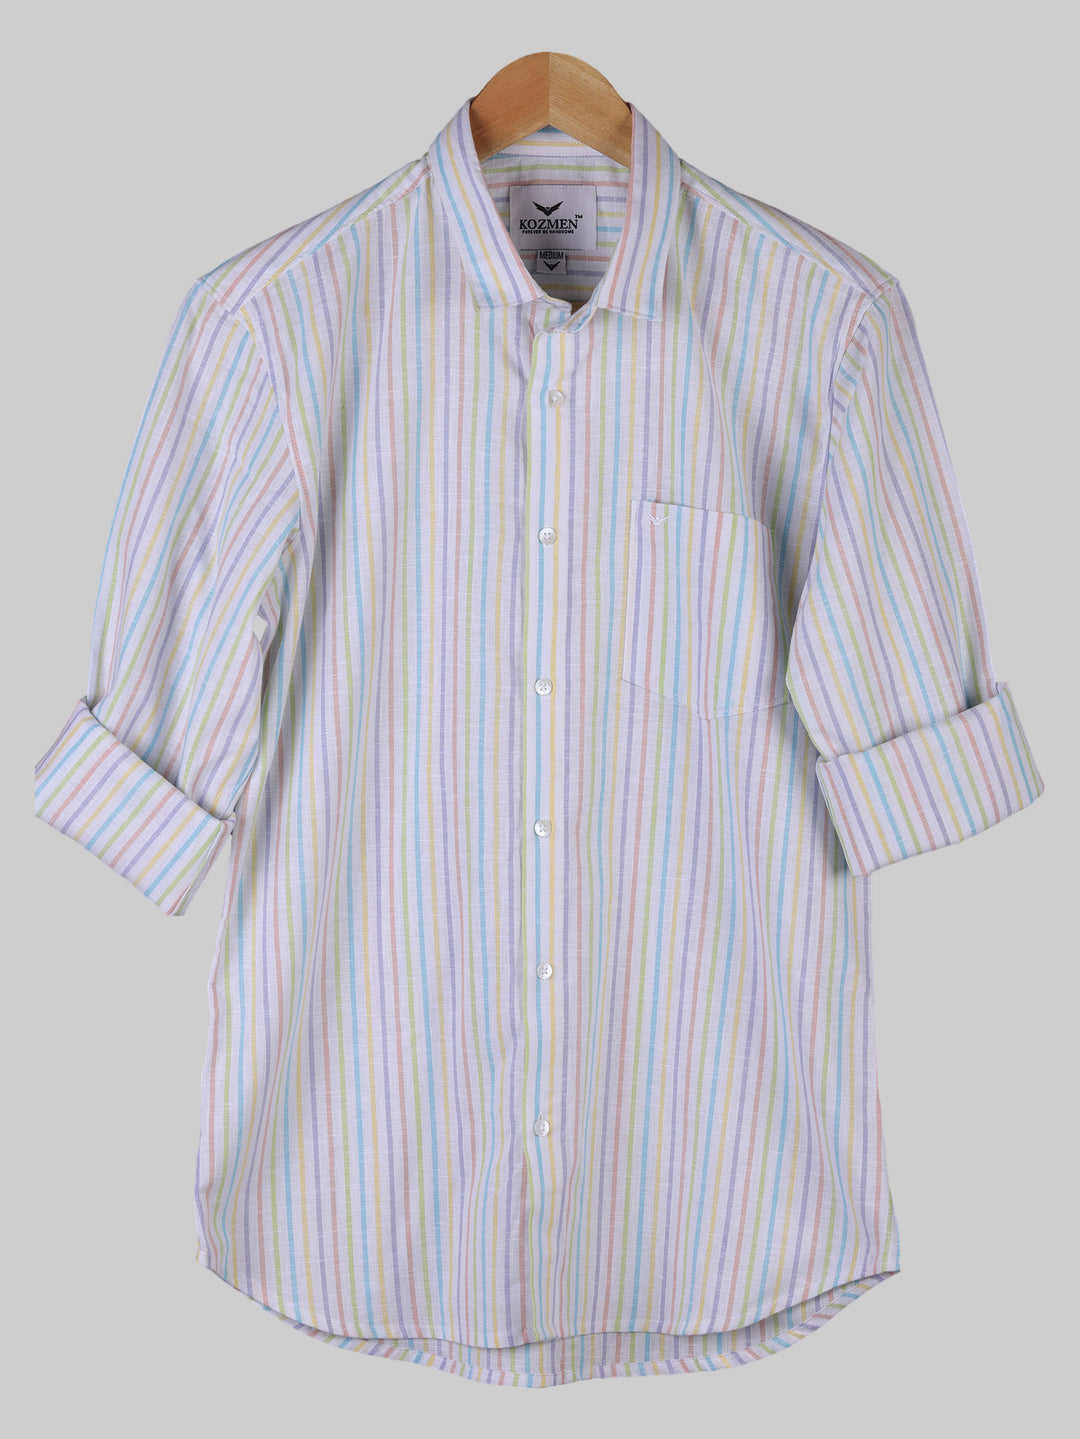 Premium Quality Candy Striped Cotton Shirt